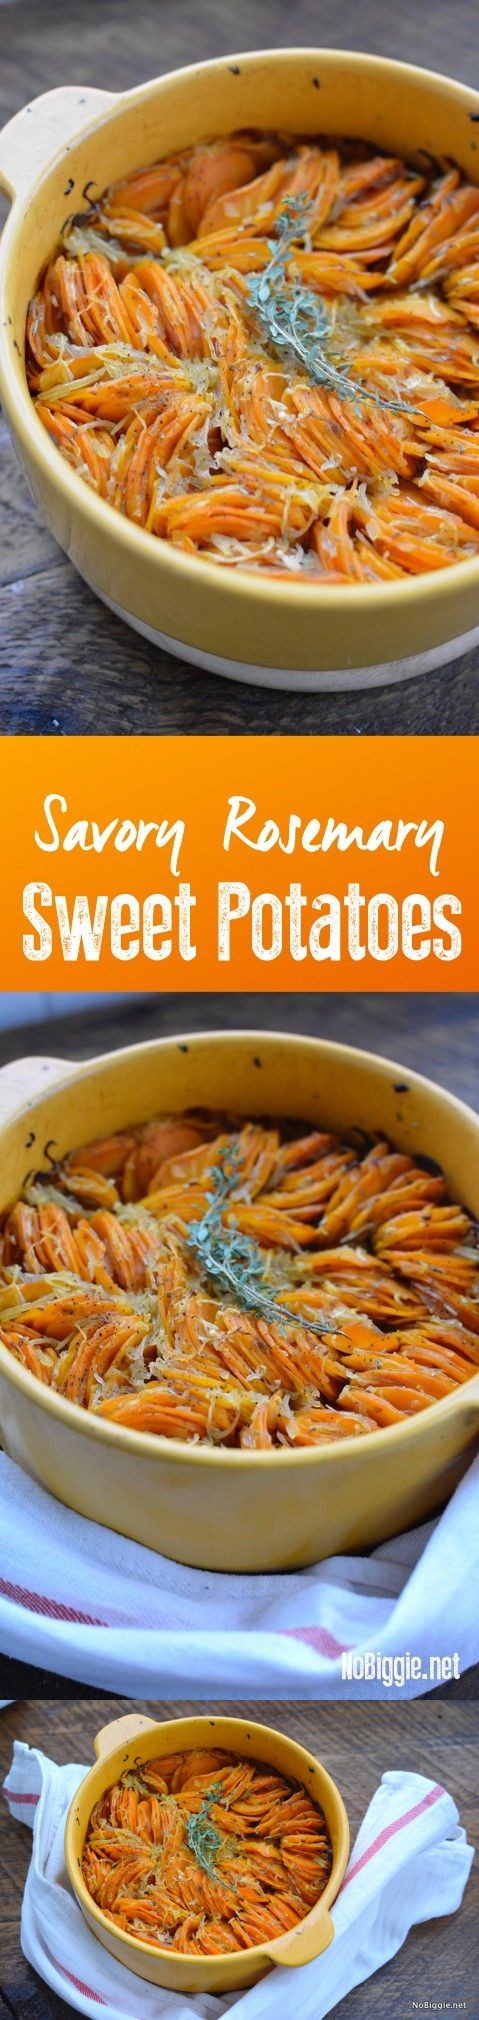 Savory Rosemary Sweet Potatoes